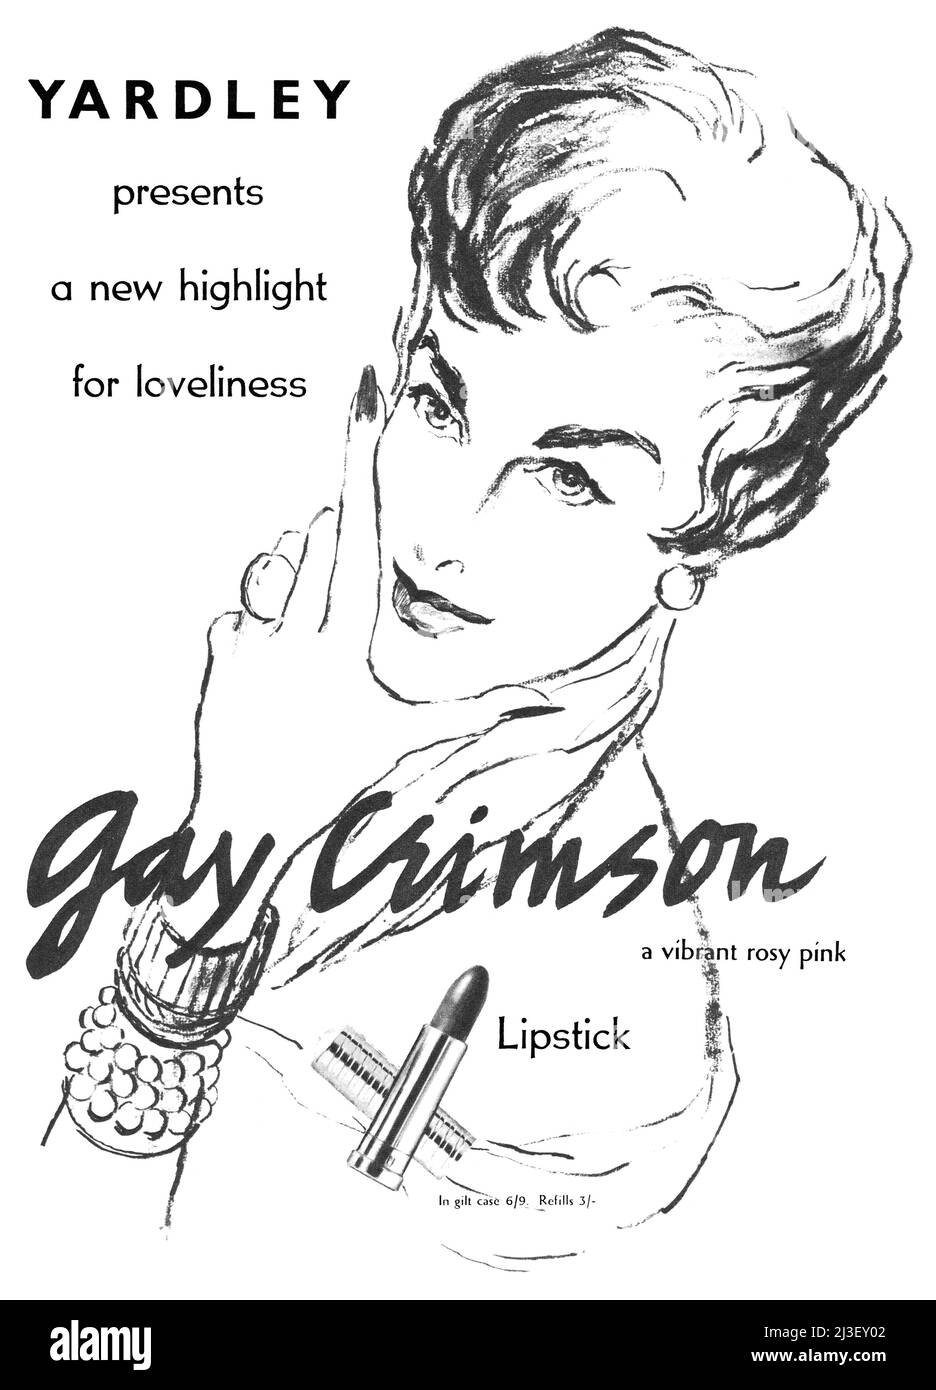 1955 British advertisement for Yardley Lipstick. Stock Photo